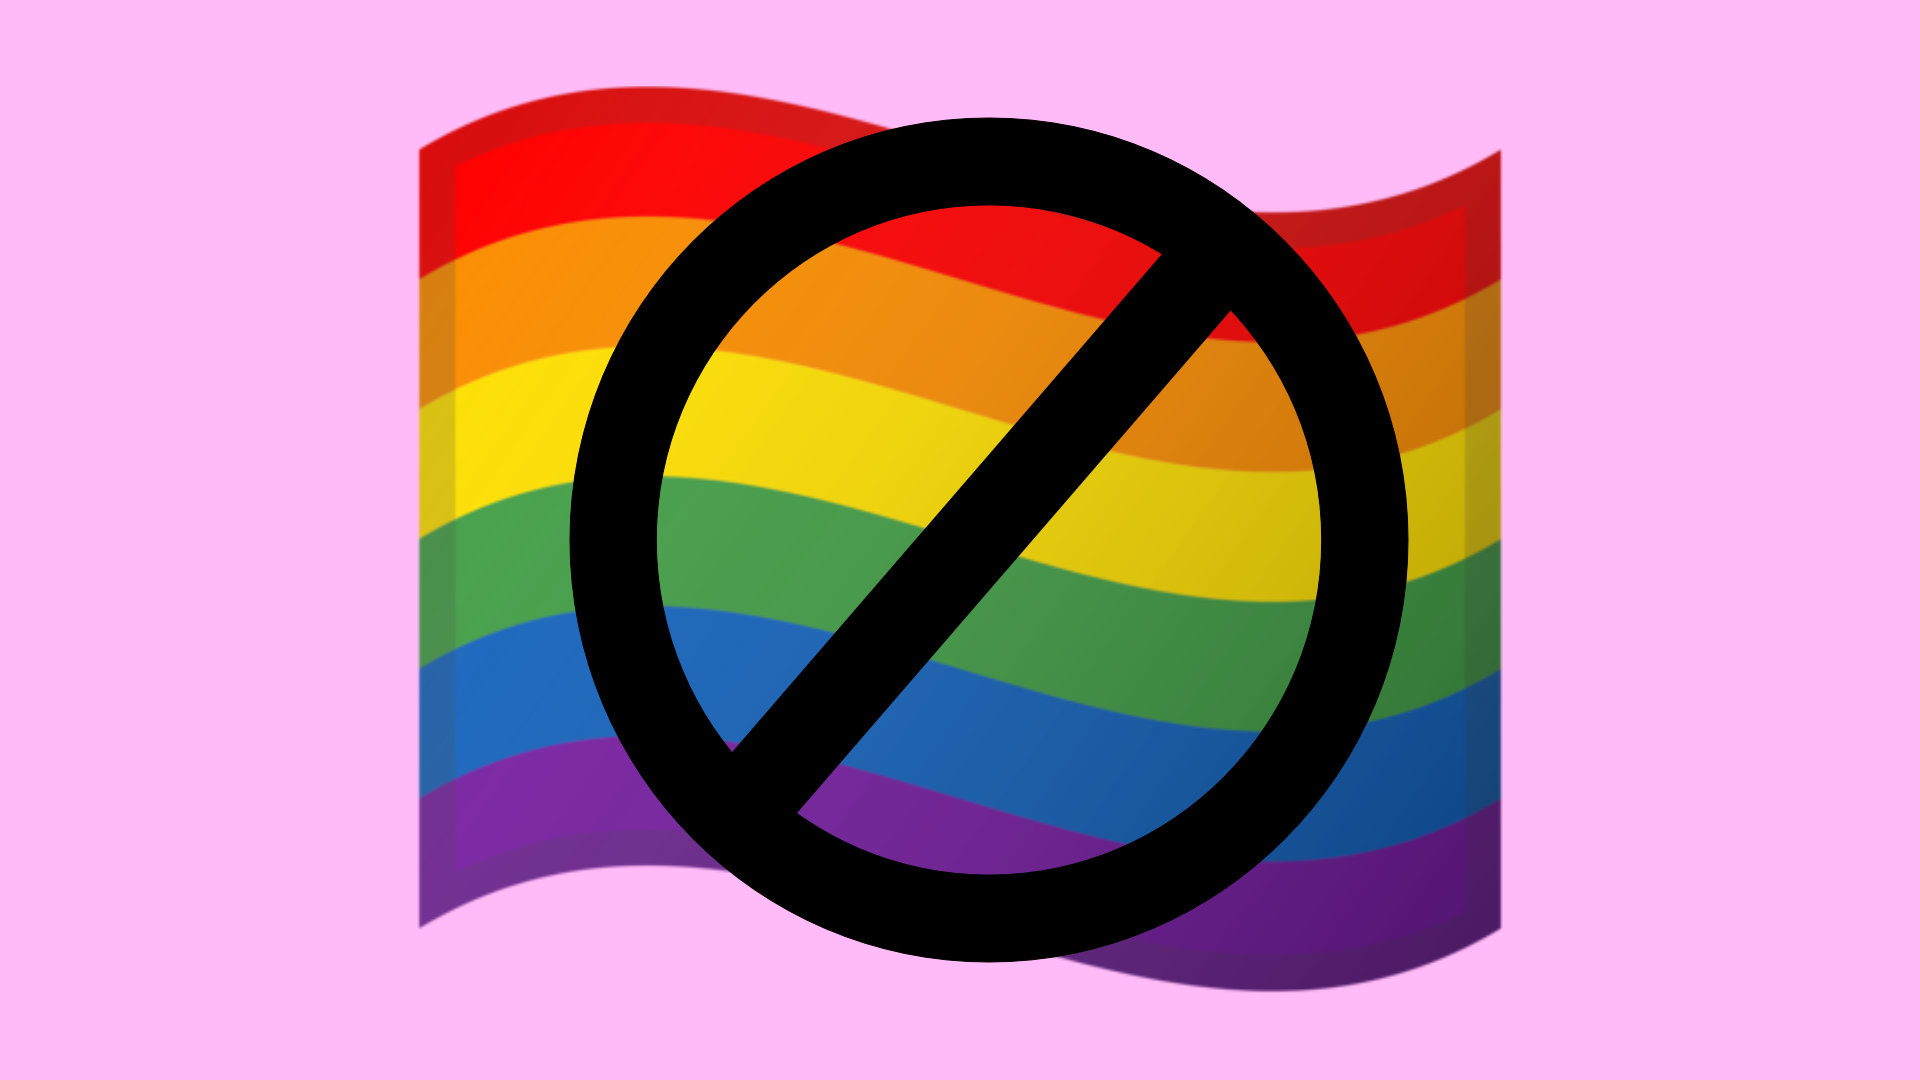 gay pride flag emoji why